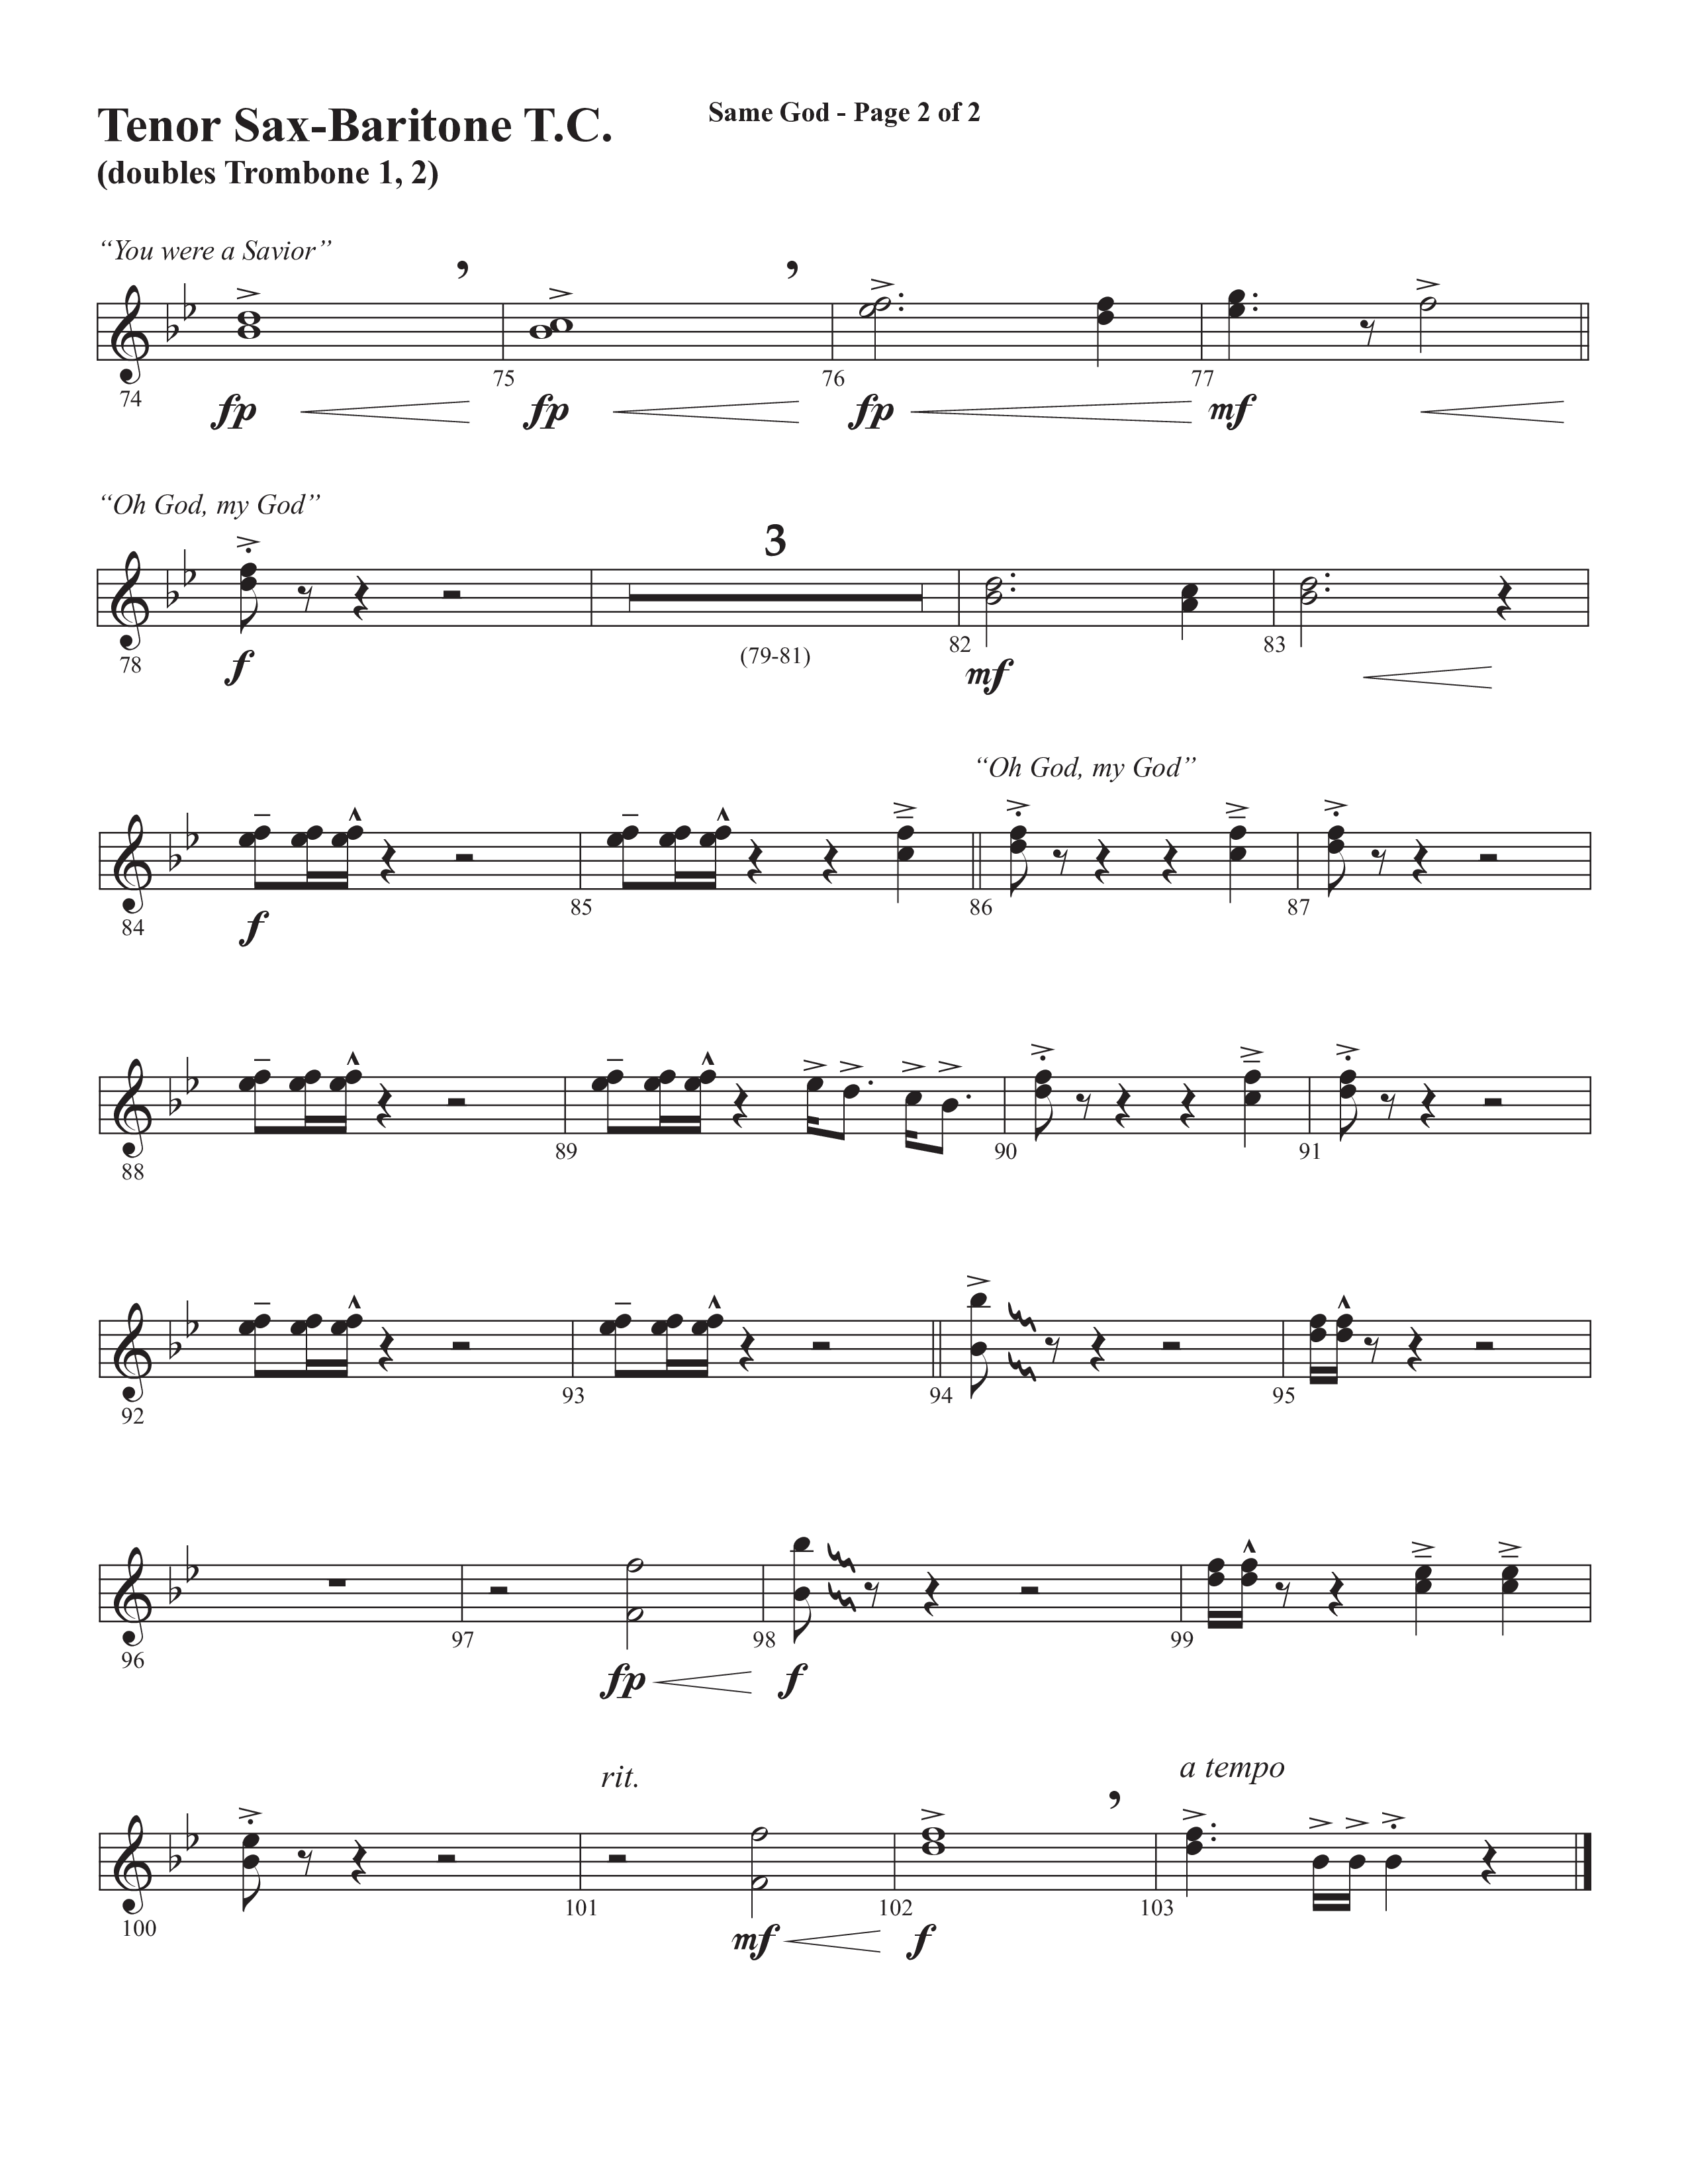 Same God (Choral Anthem SATB) Tenor Sax/Baritone T.C. (Semsen Music / Arr. Phil Nitz)